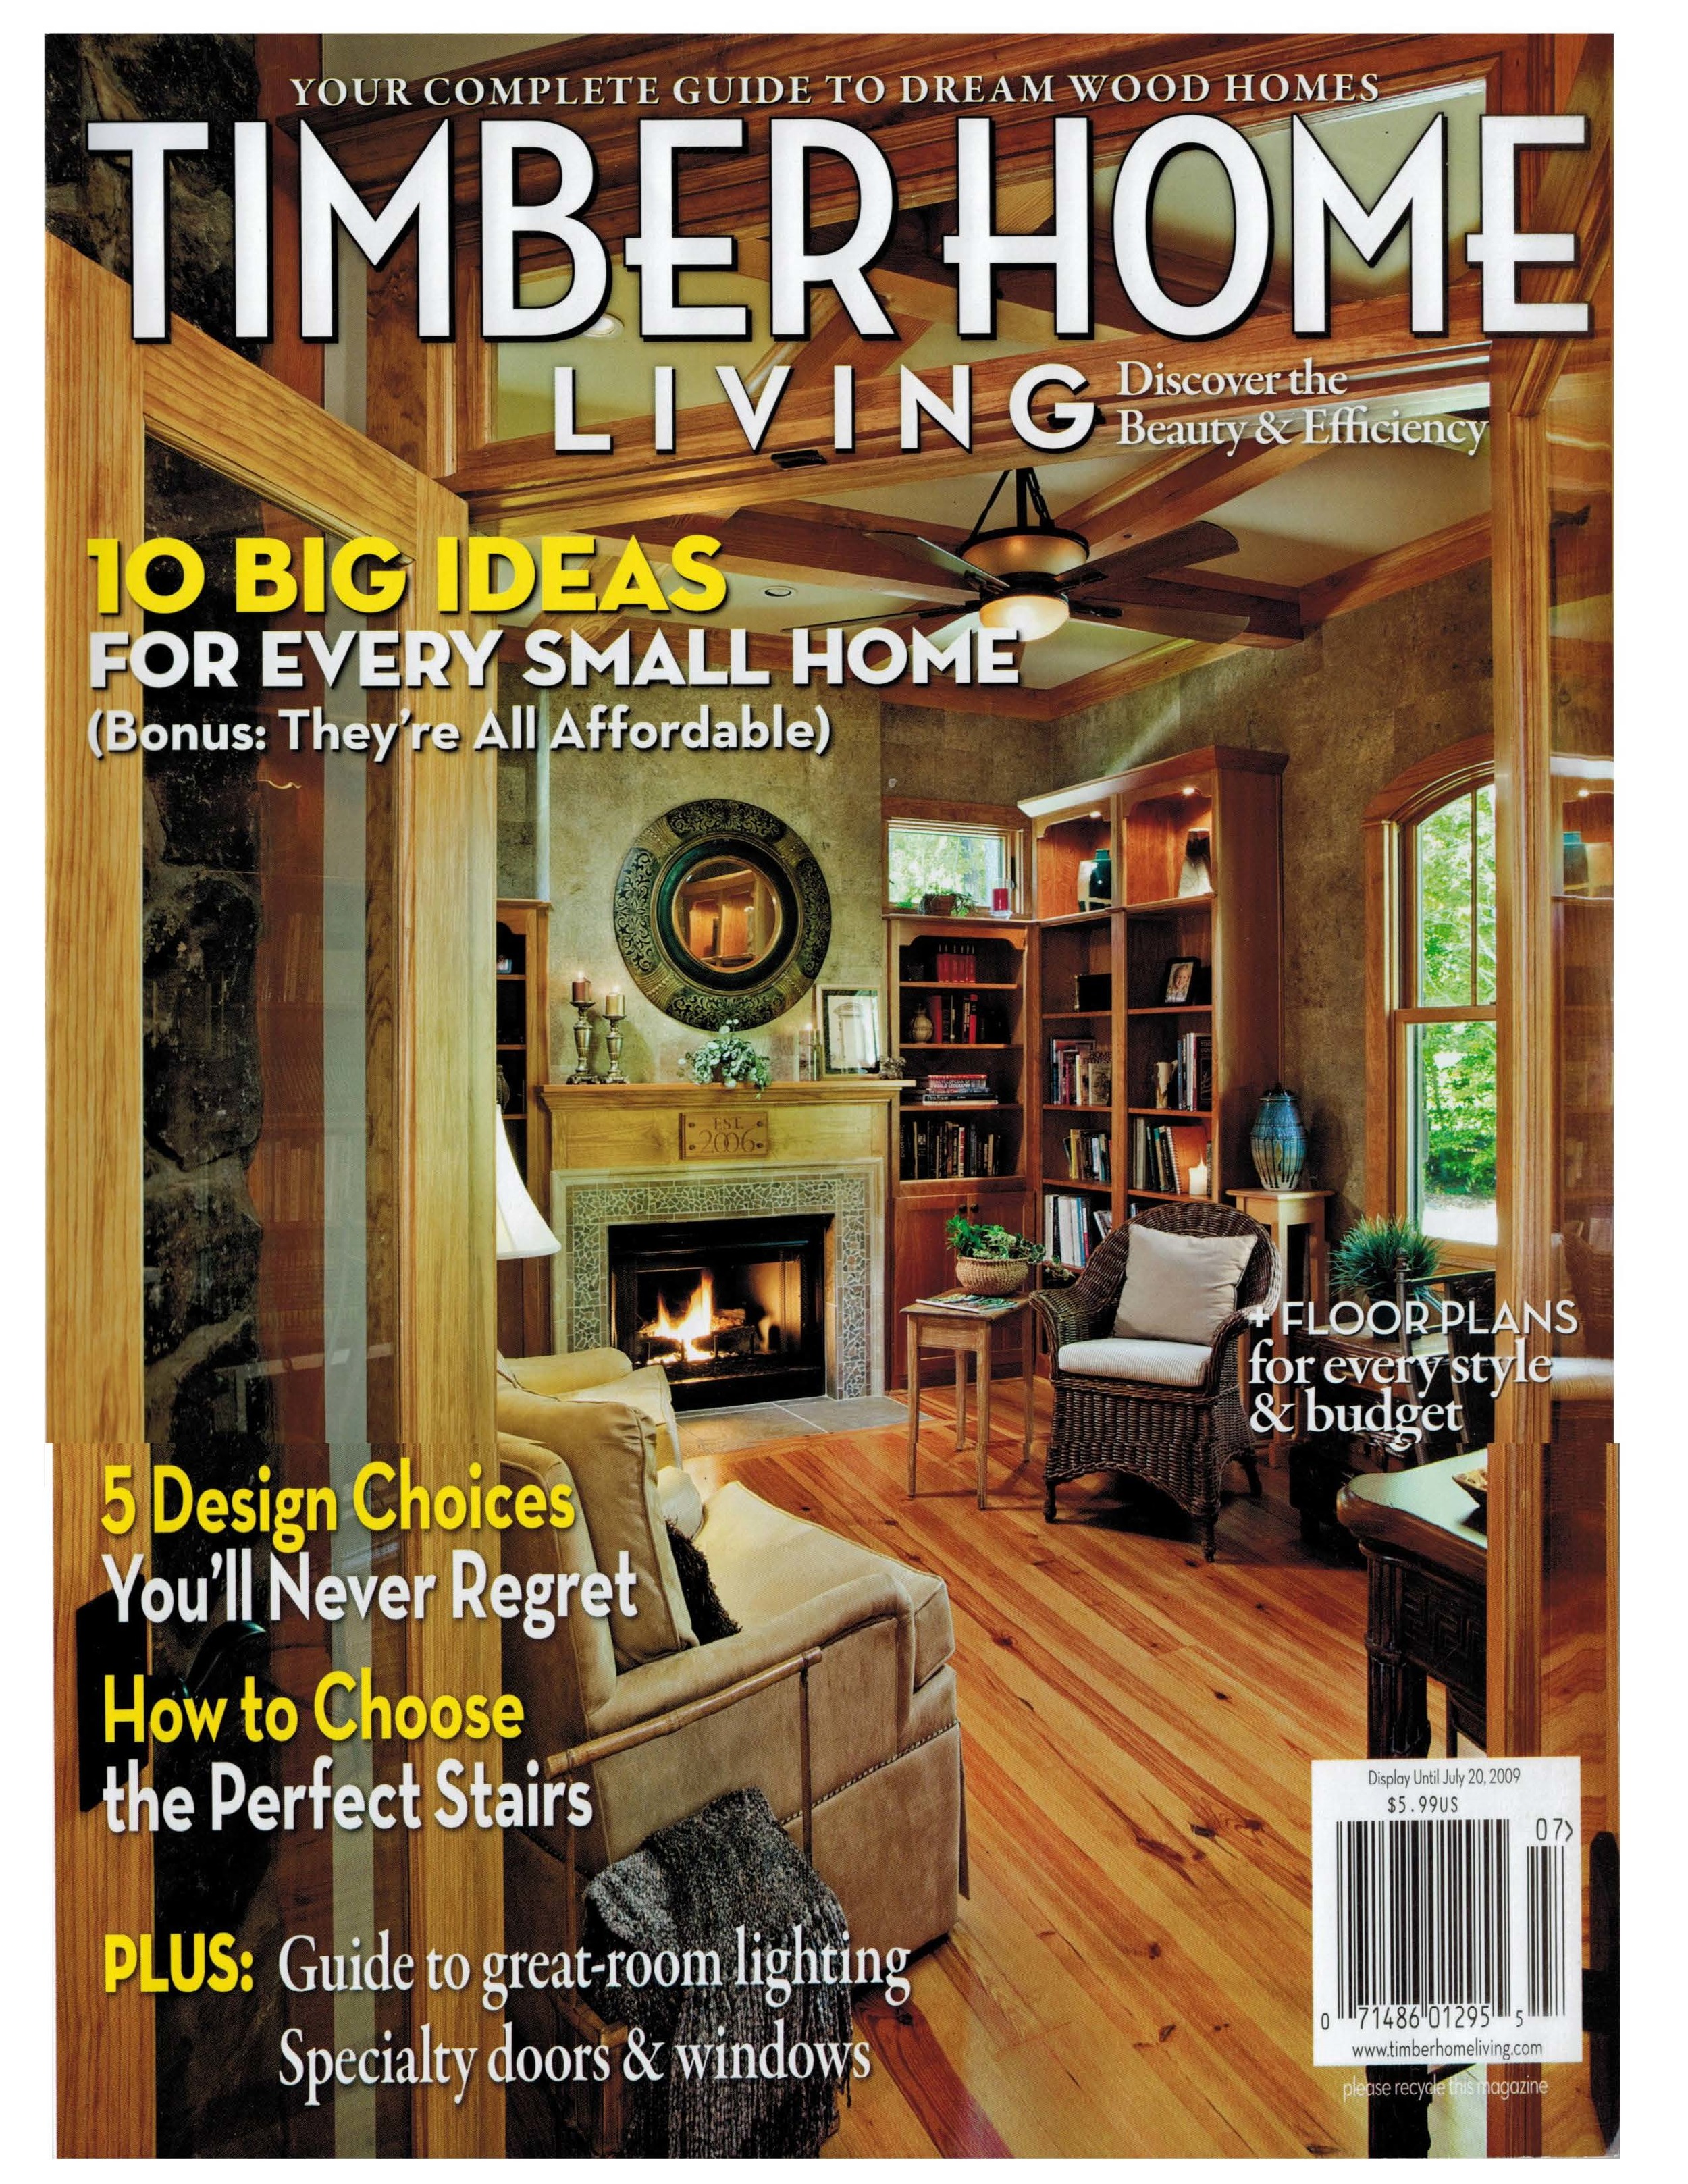 5 Timber Home Living-July 2009.jpg